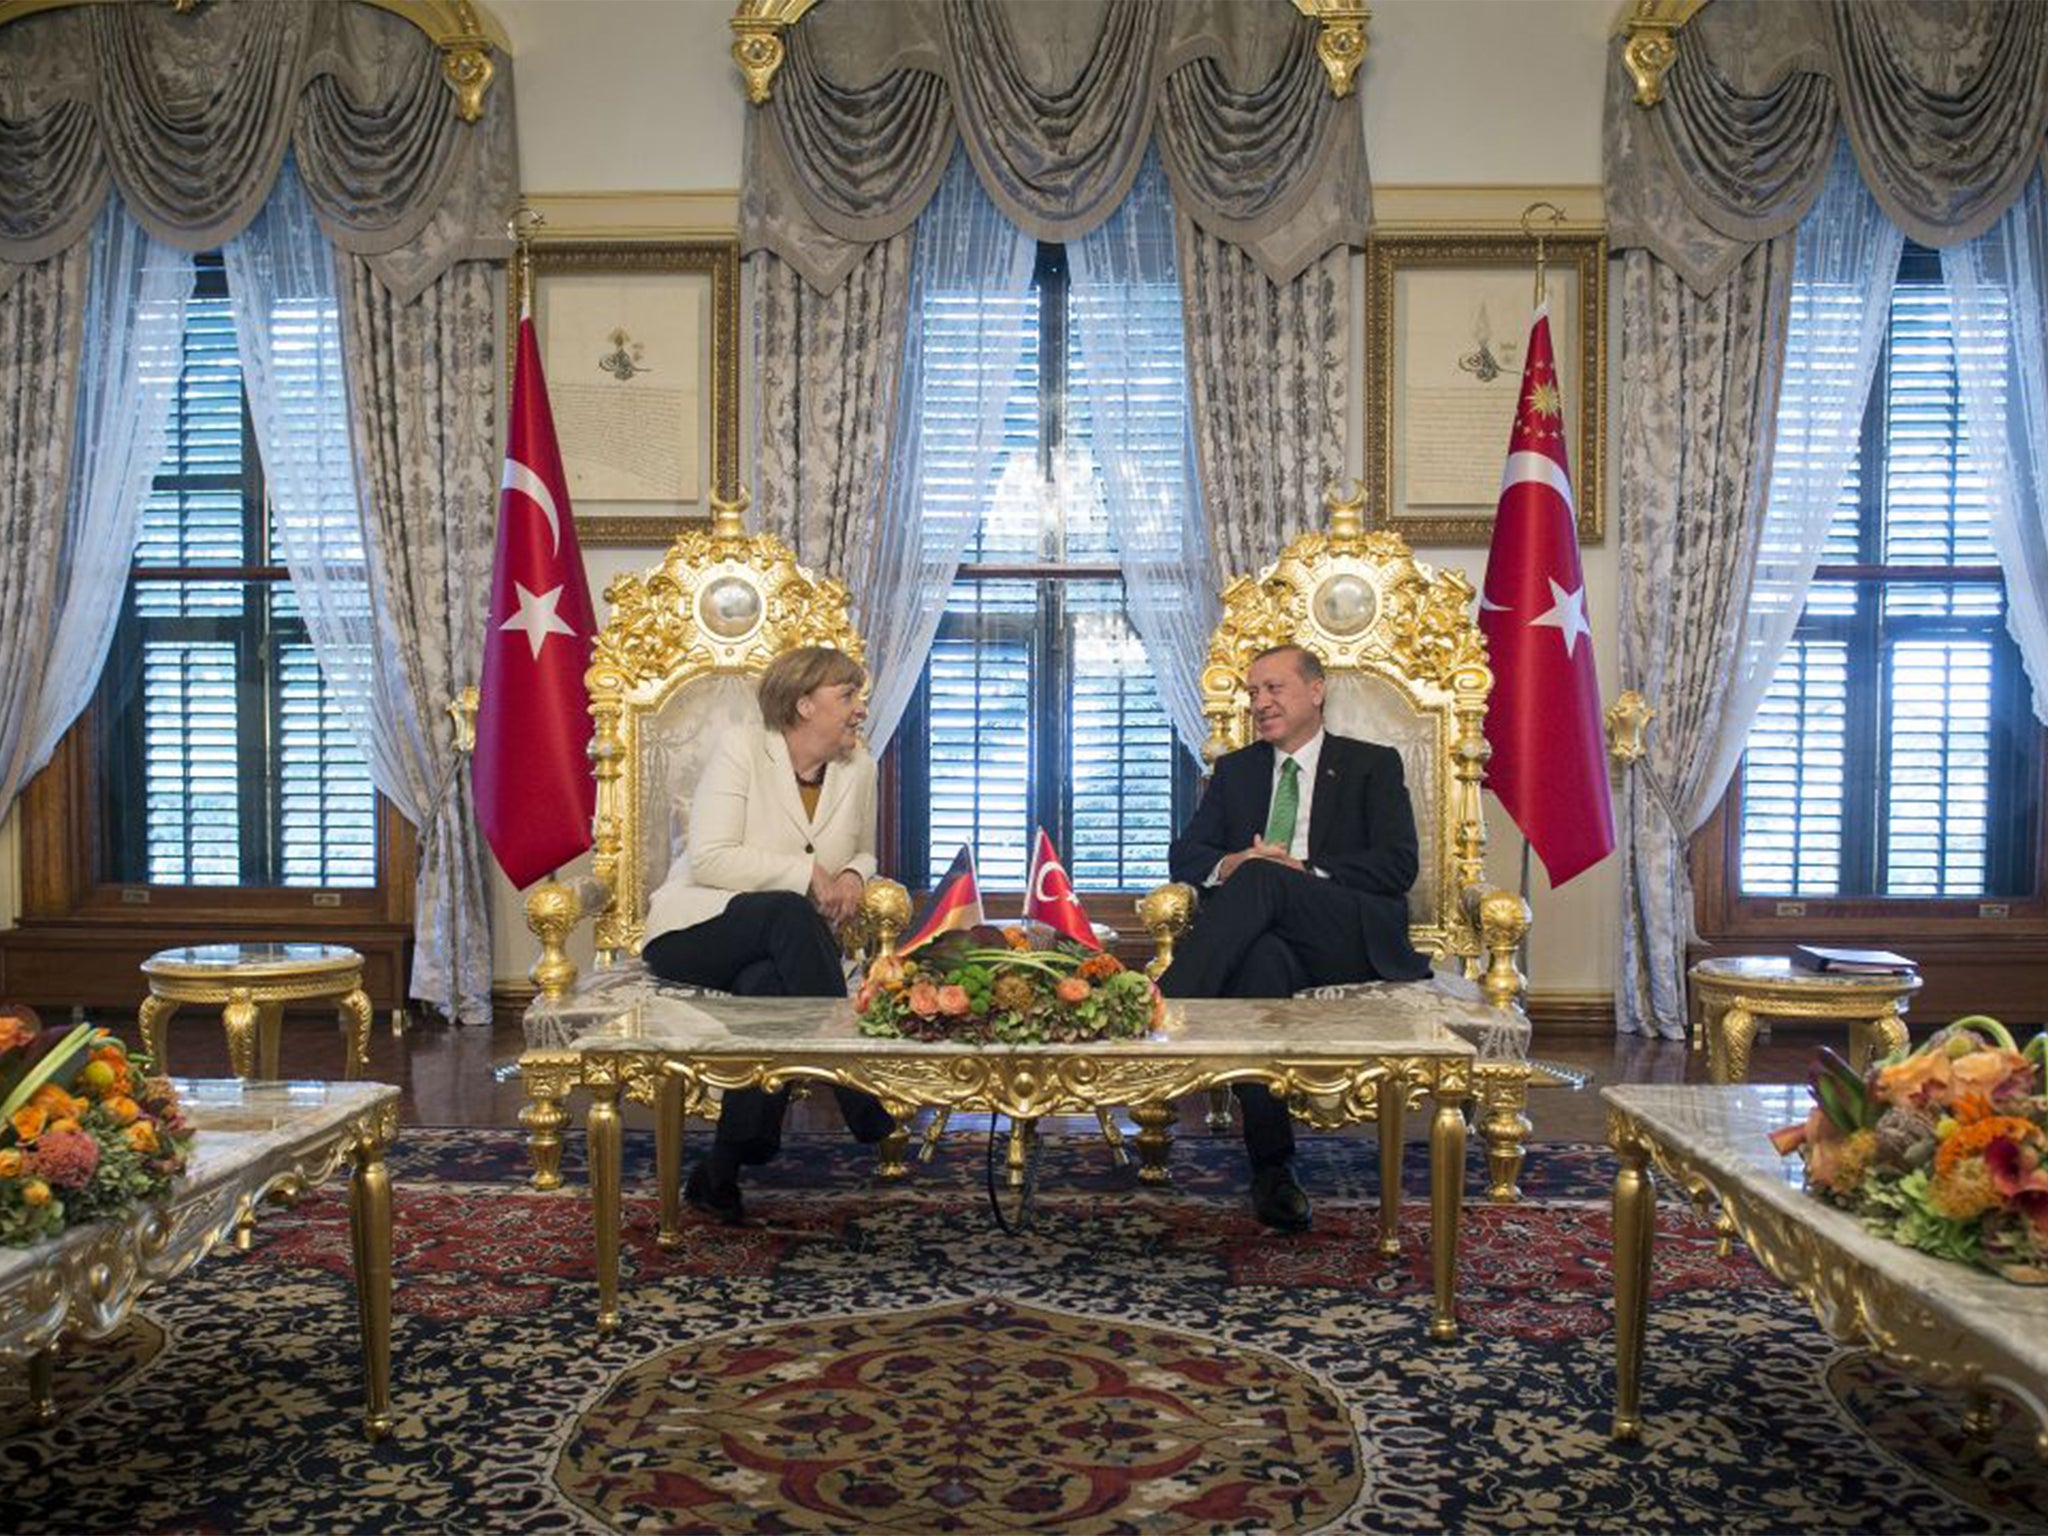 German Chancellor Angela Merkel and Turkish President Recep Tayyip Erdogan talk at the start of their meeting at the Yildiz Palace